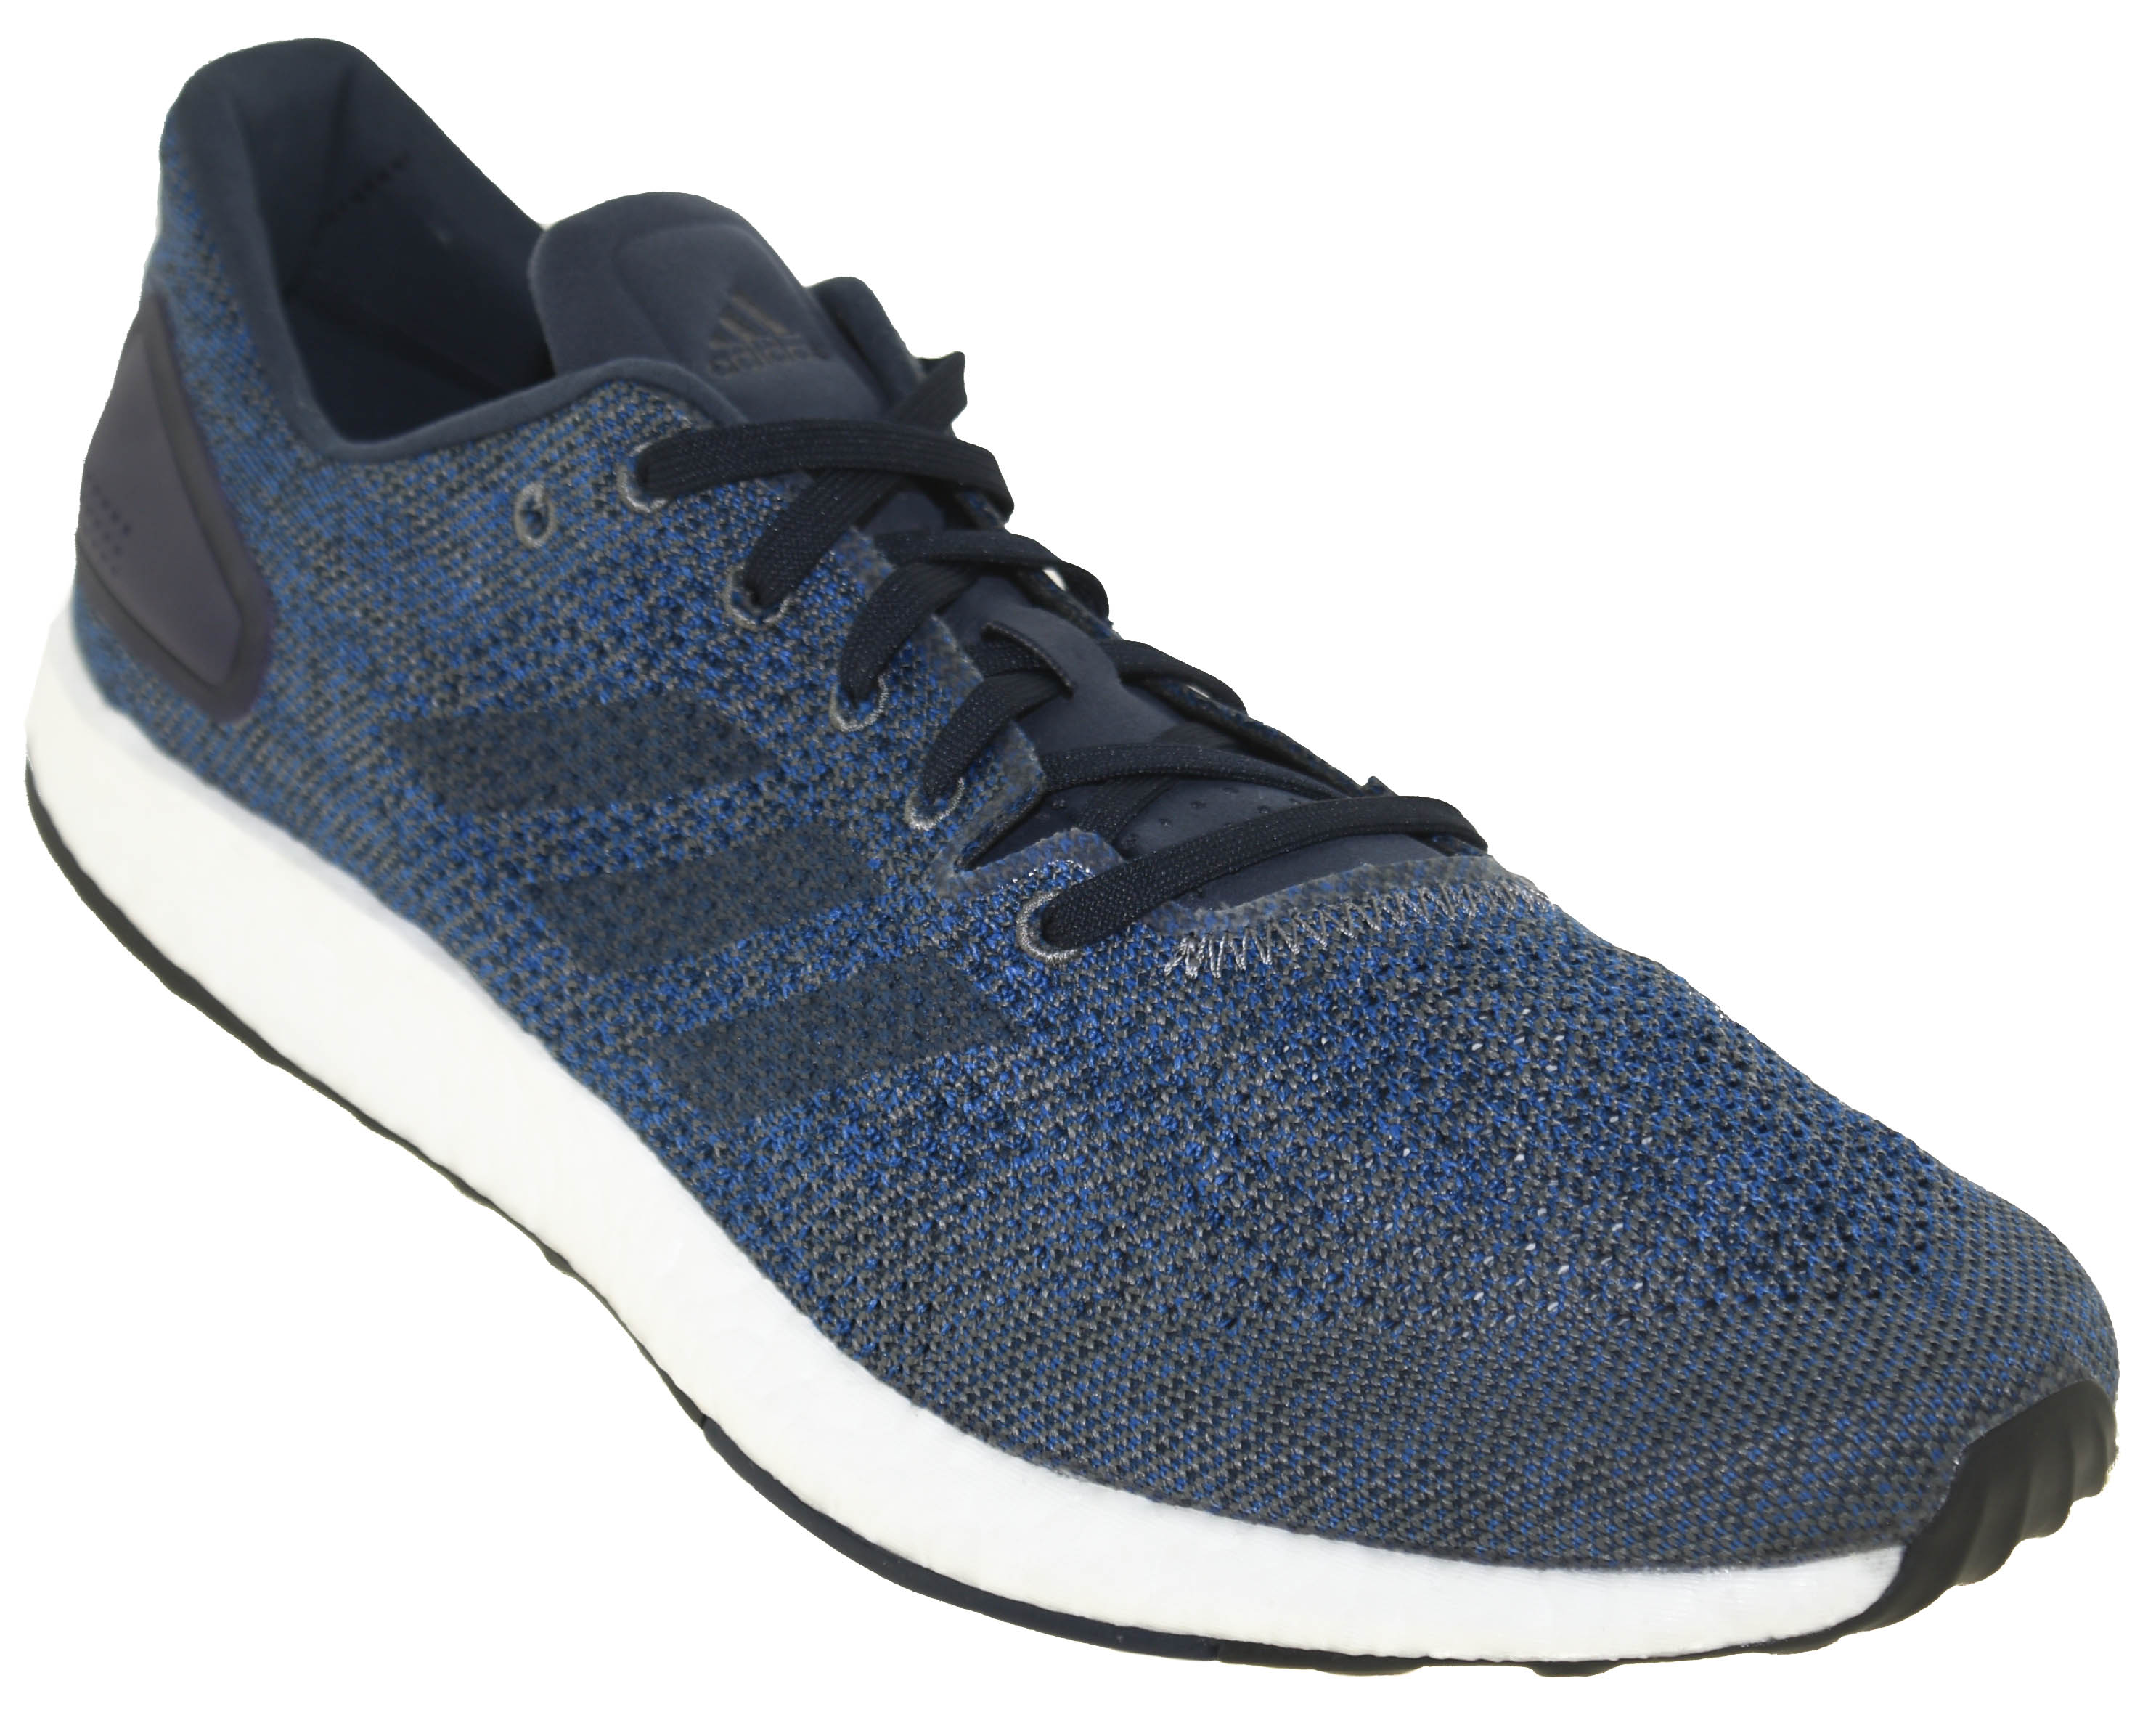 Adidas Men's PureBoost DPR Running Shoe Style BB6293 | eBay